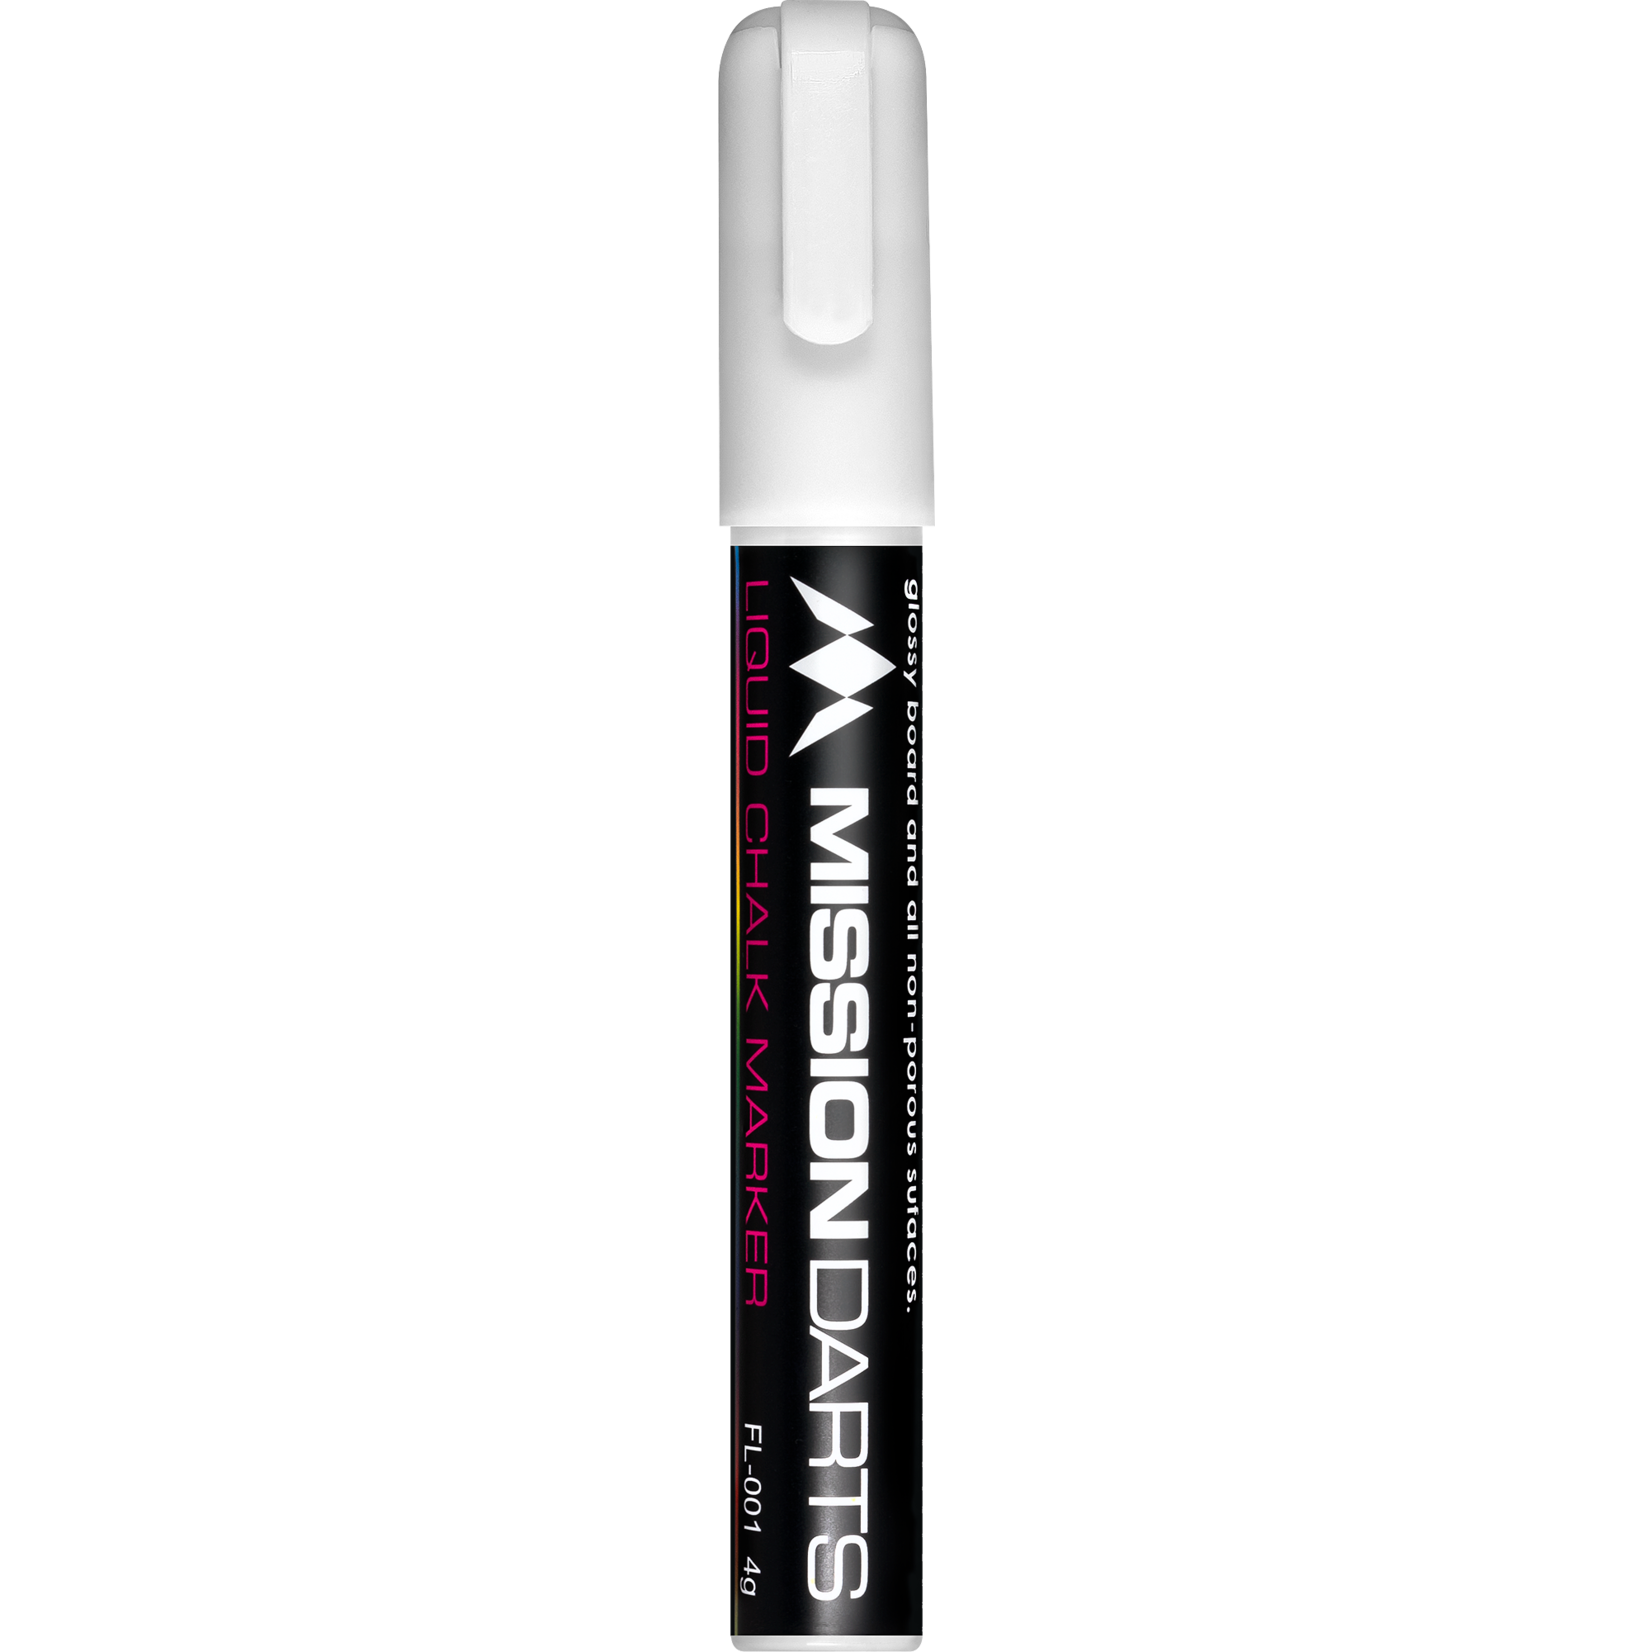 Mission Darts Mission Darts Liquid Chalk White Dry Wipe Pen